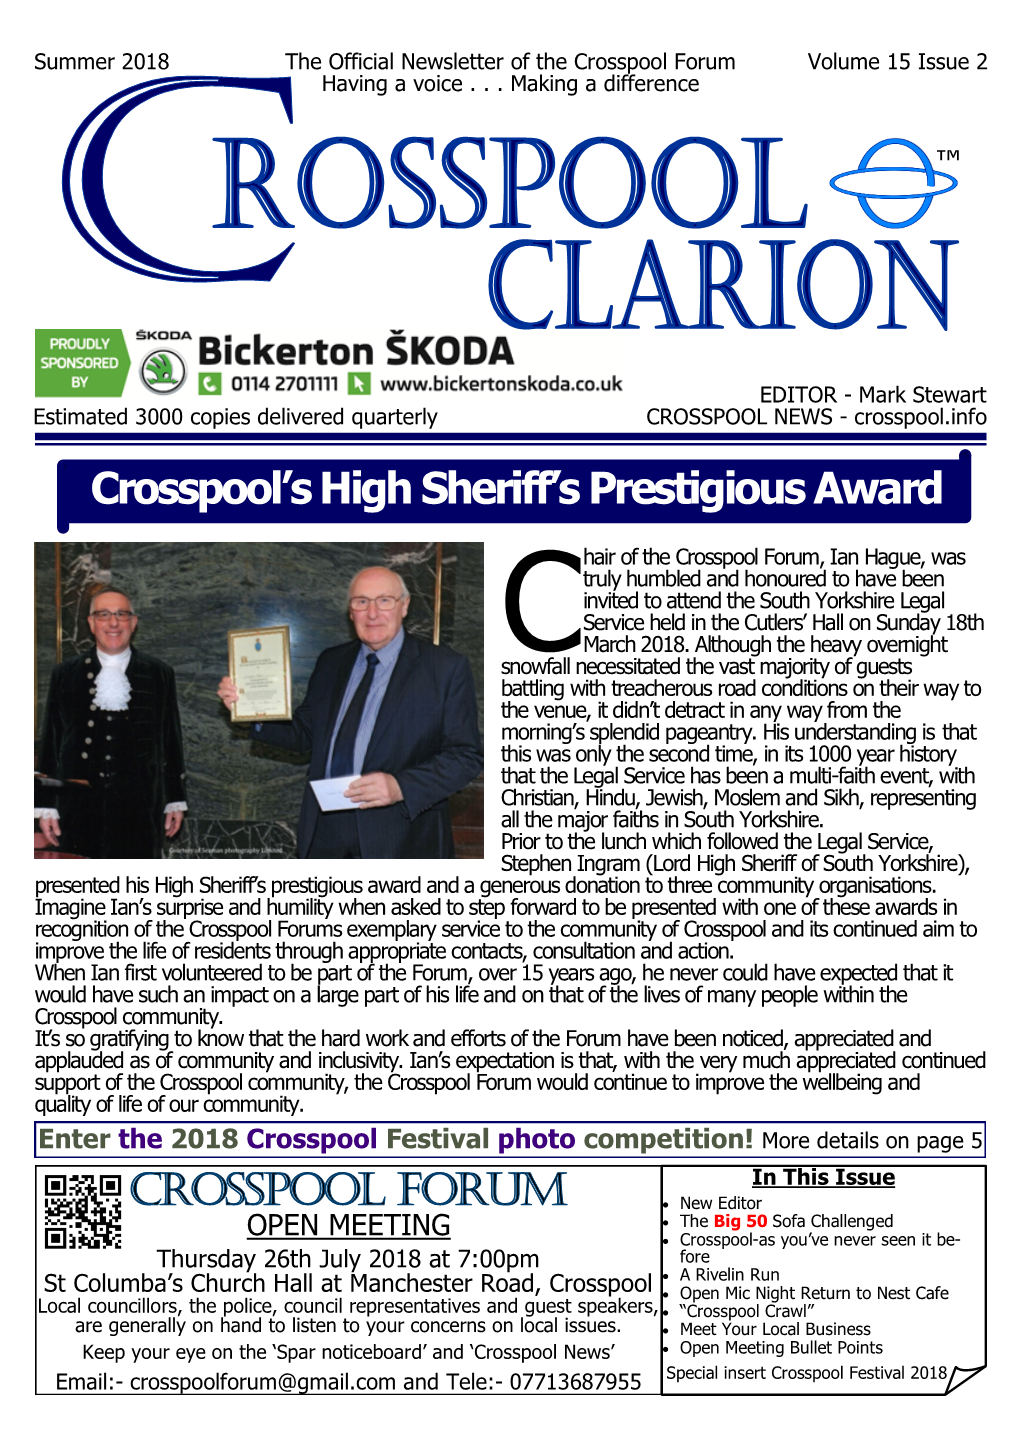 Crosspool's High Sheriff's Prestigious Award